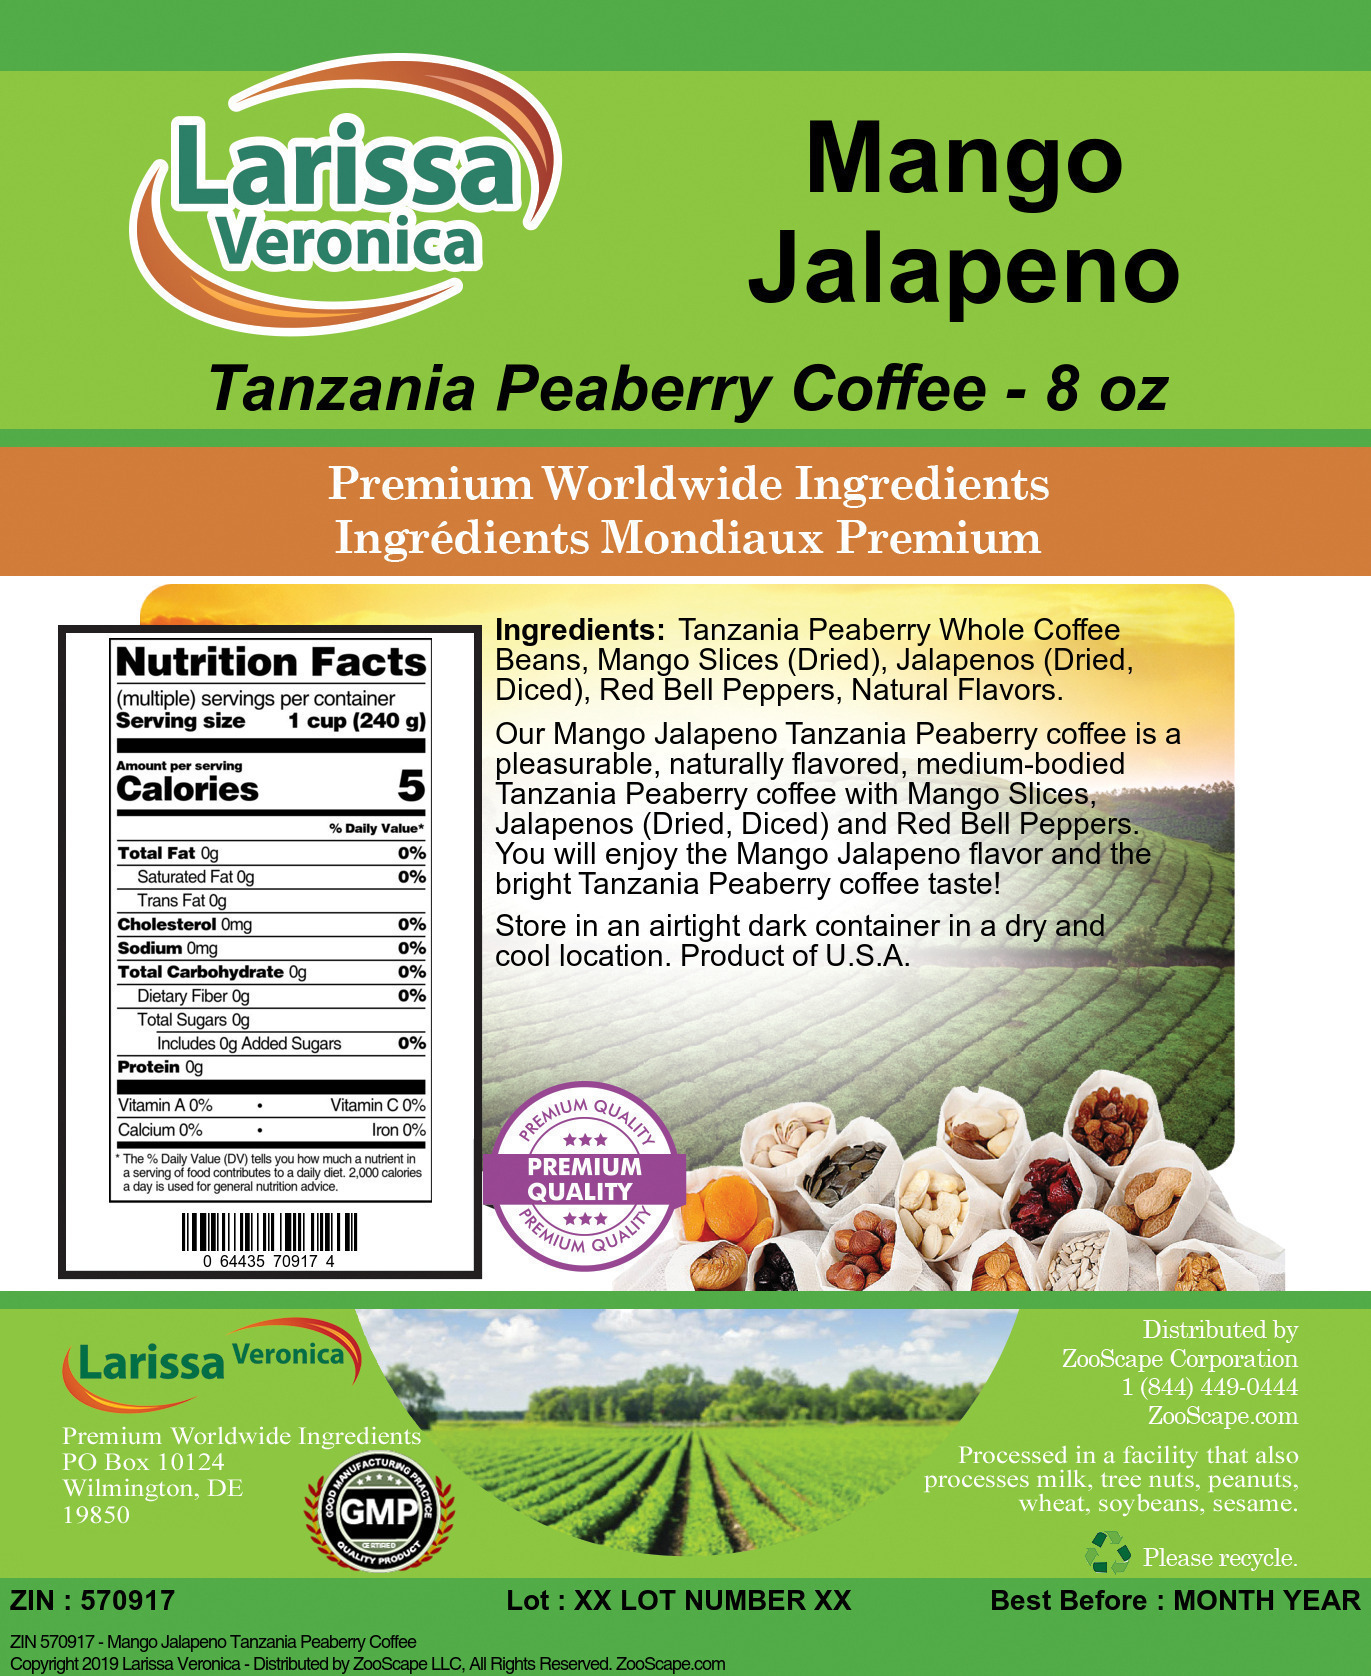 Mango Jalapeno Tanzania Peaberry Coffee - Label